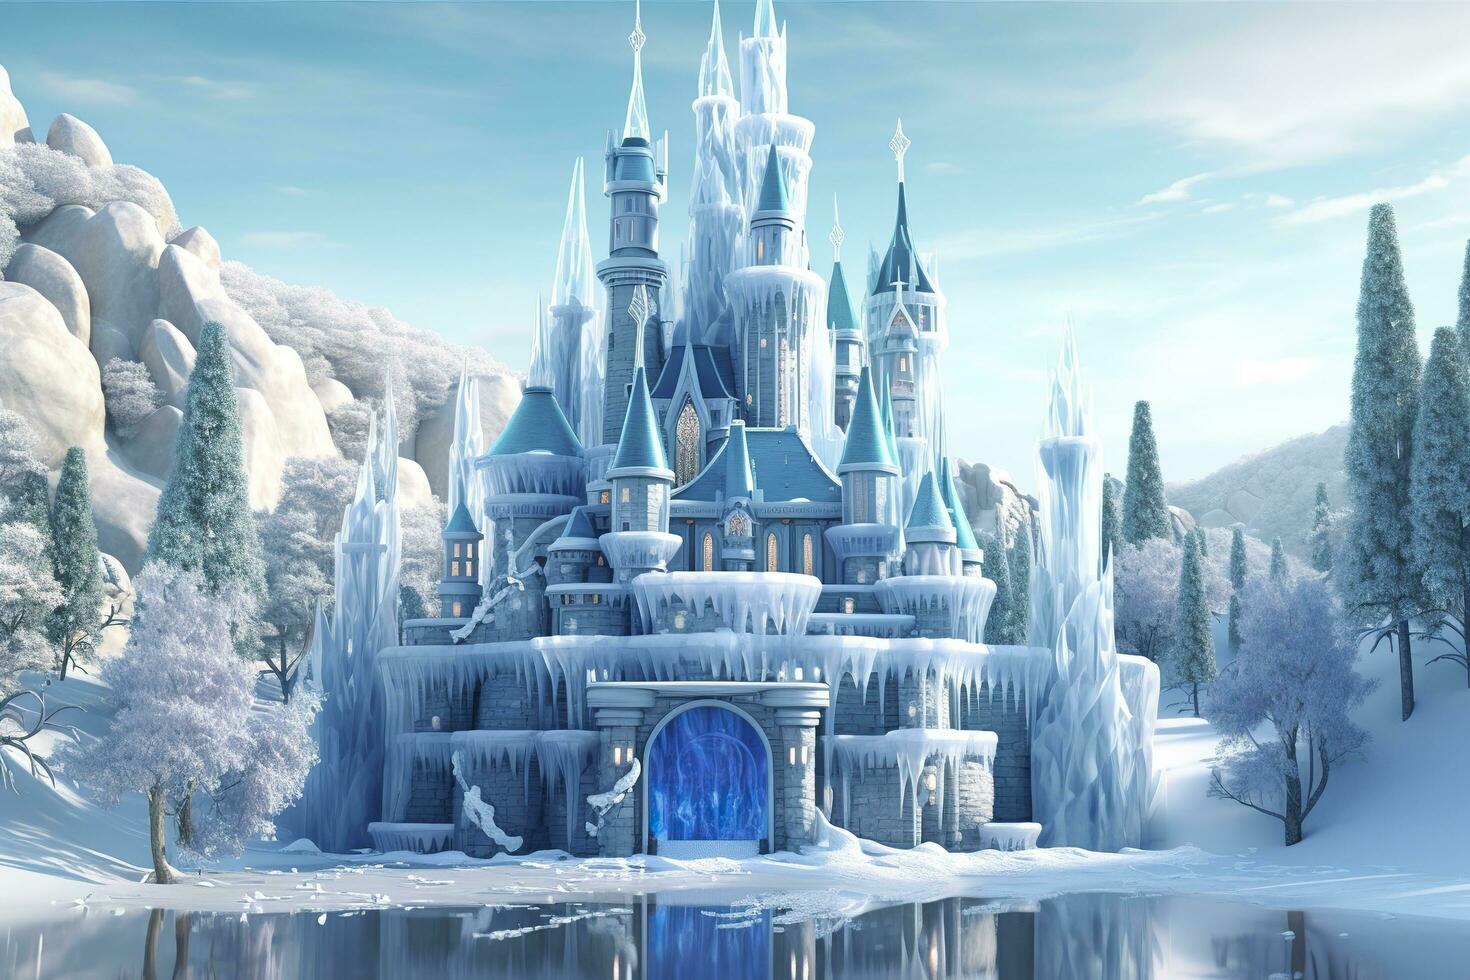 Cute blue Magic Ice Castle. Fantasy snowy landscape. Winter castle on the mountain, winter forest. AI Generative photo